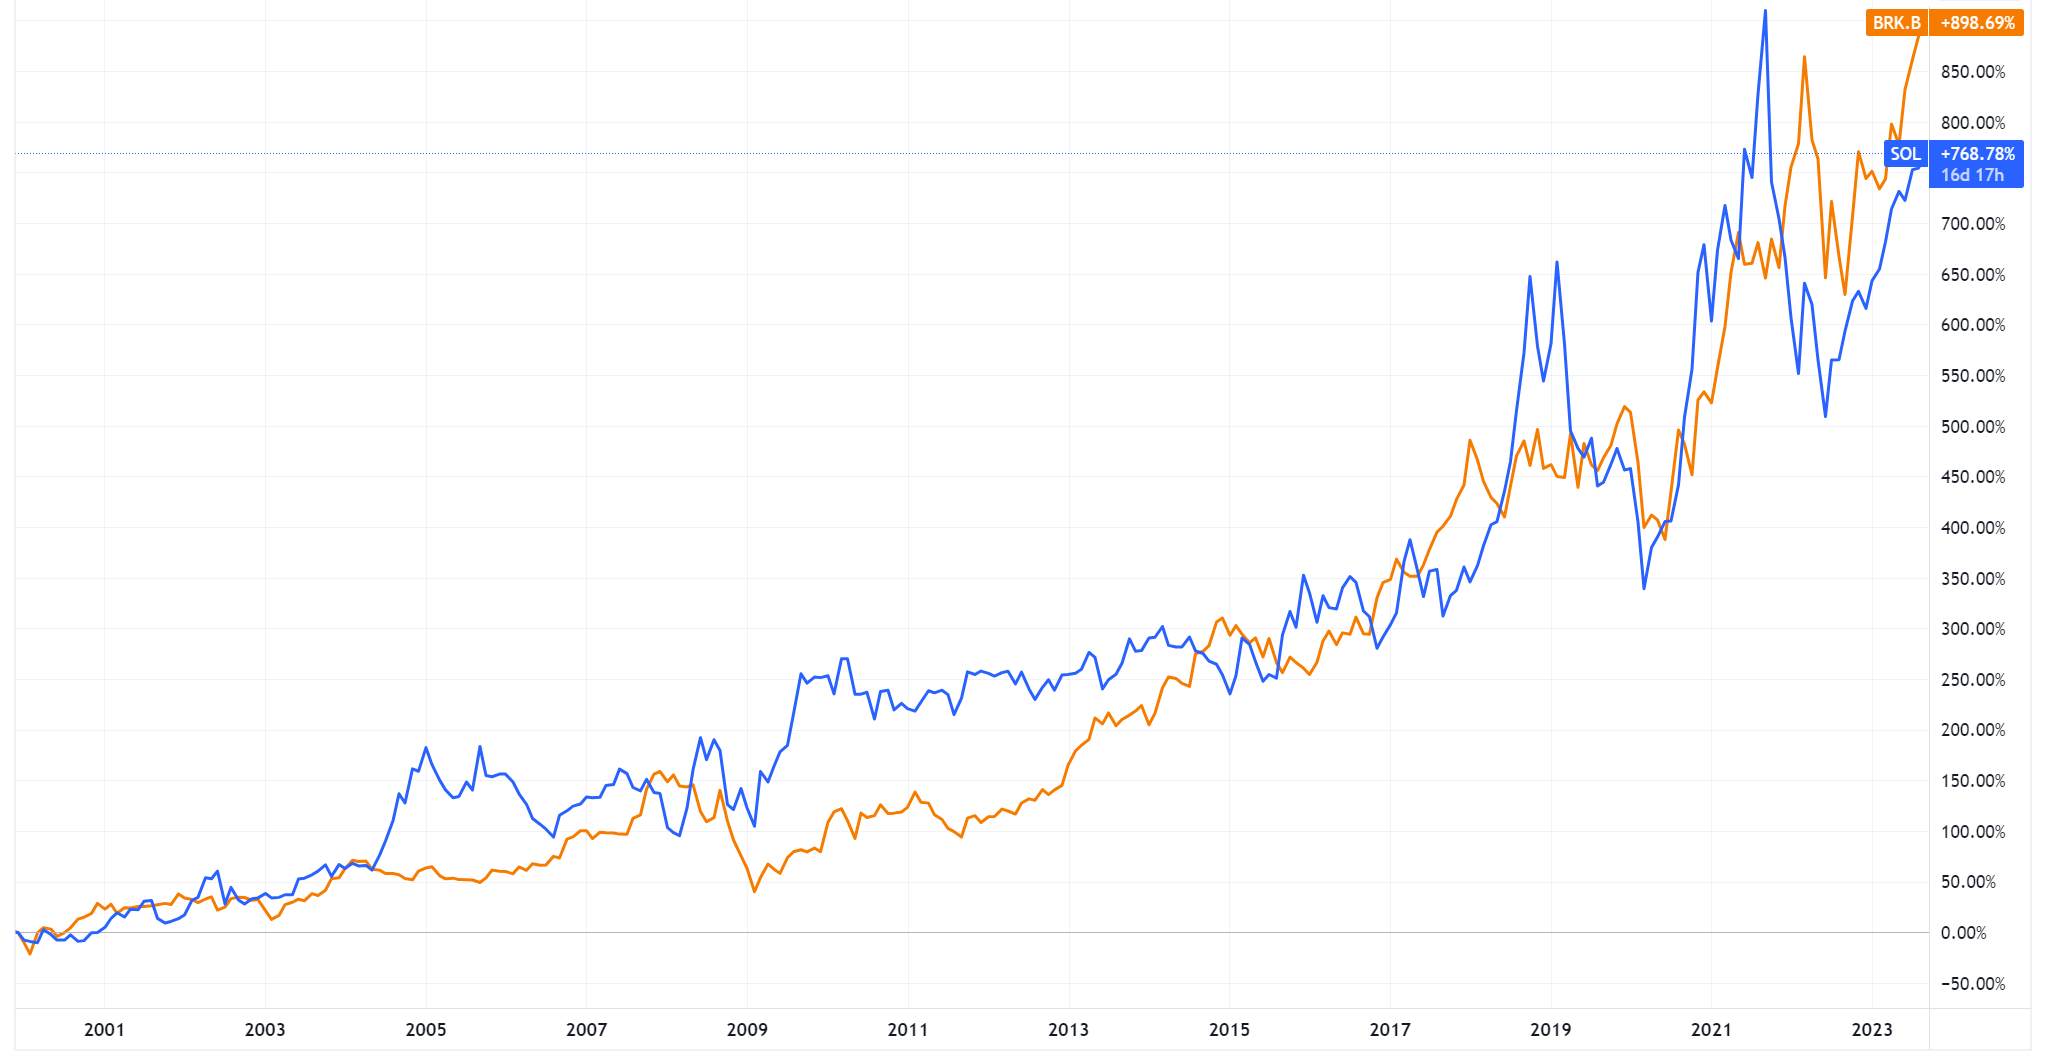 WHSP (Blue) vs. Berkshire Hathaway Class B (Orange) performance since 2000 (Source: TradingView)